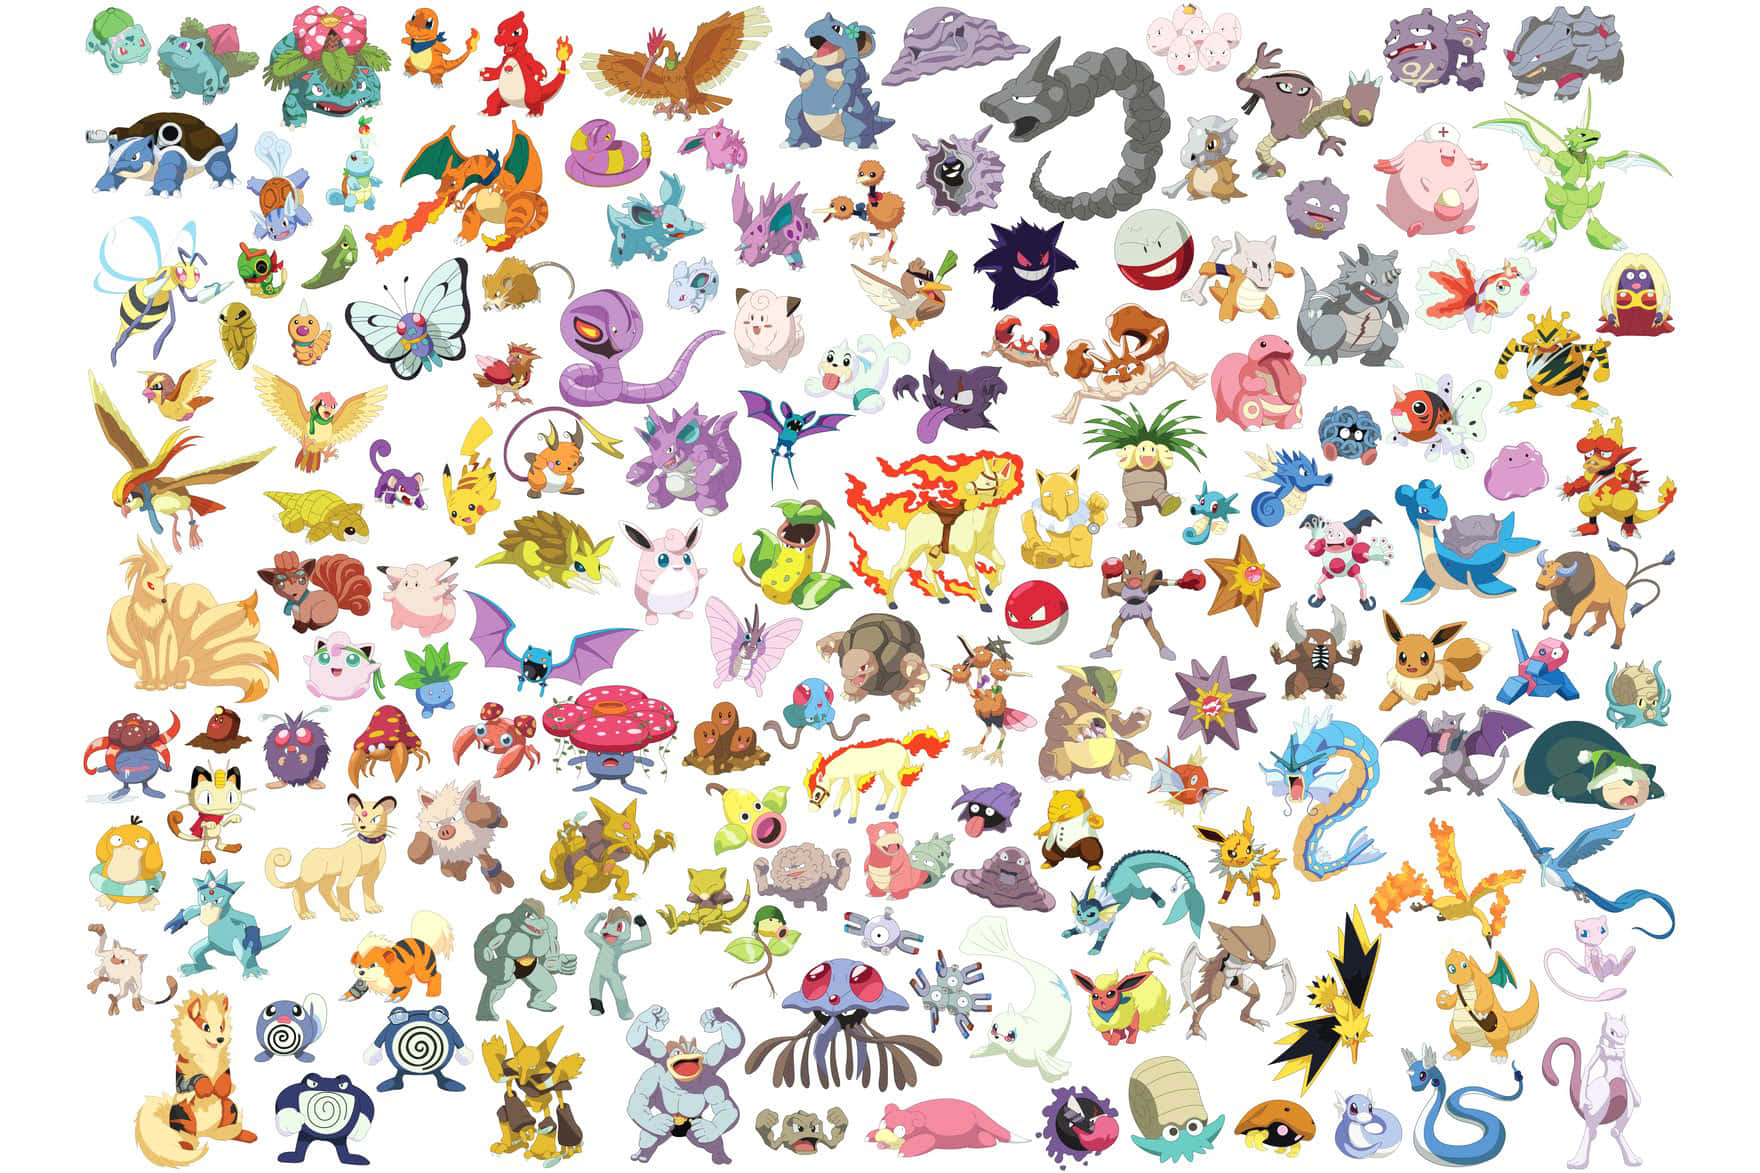 Pokemon - The Complete List Of Pokemon